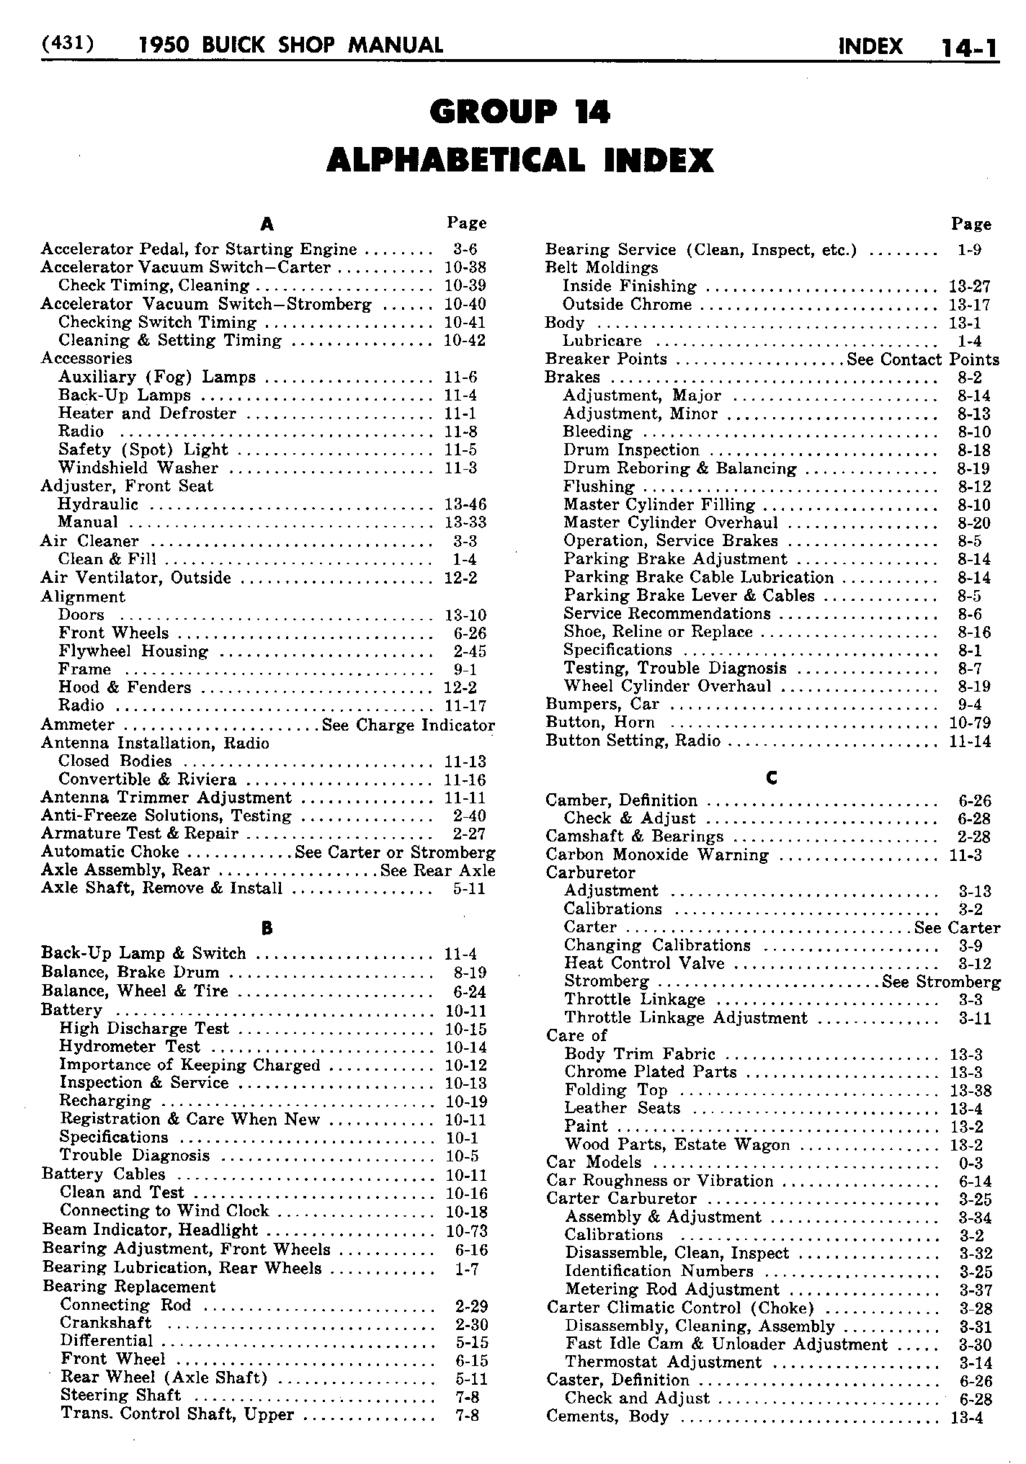 n_15 1950 Buick Shop Manual - Index-001-001.jpg